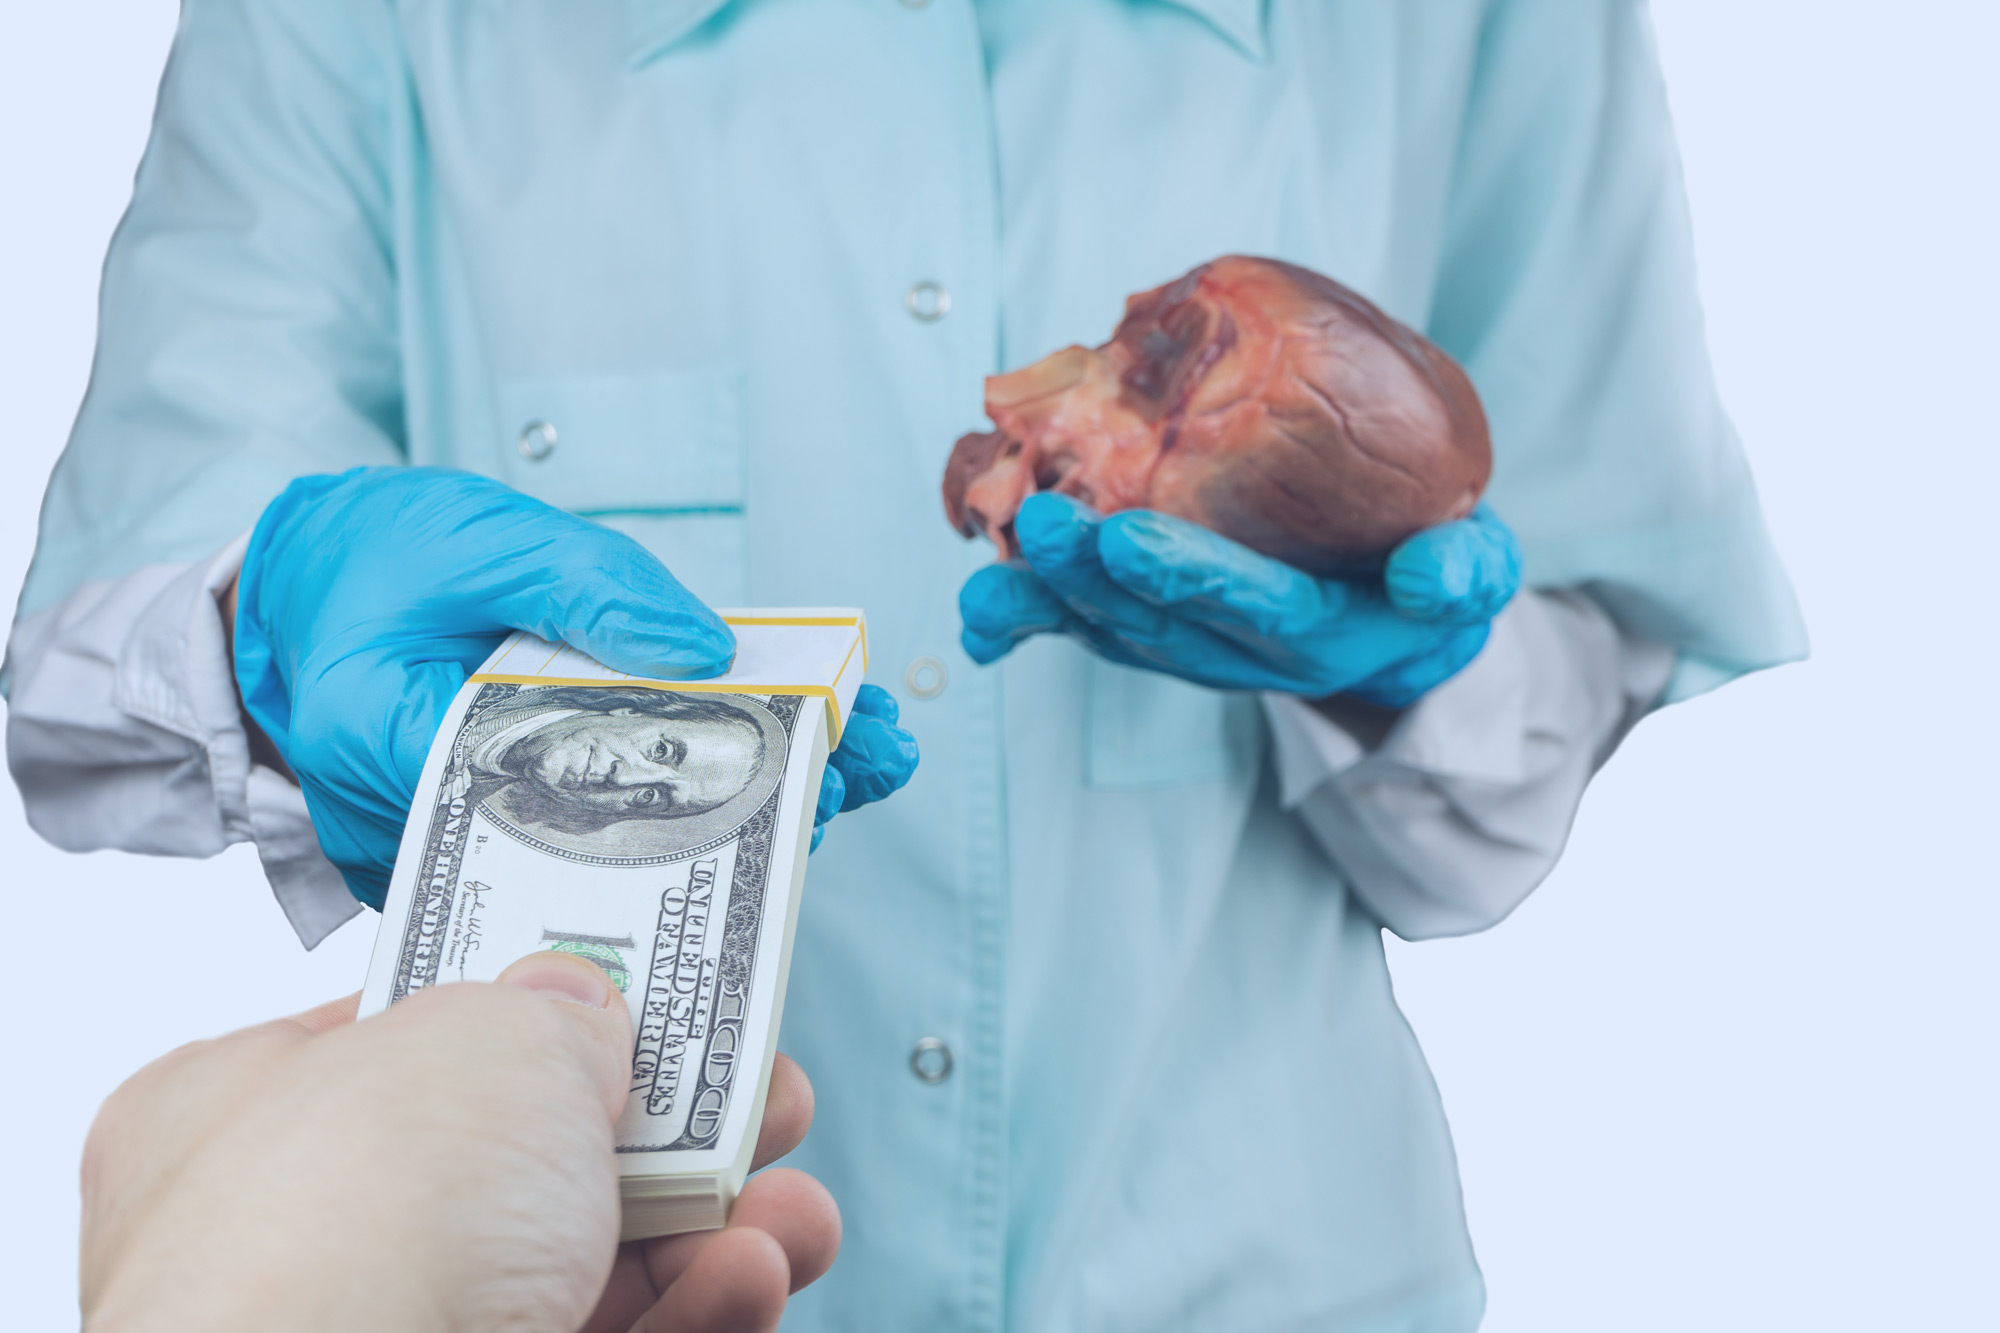 Human Organs for Sale | Buy Human Organs Online